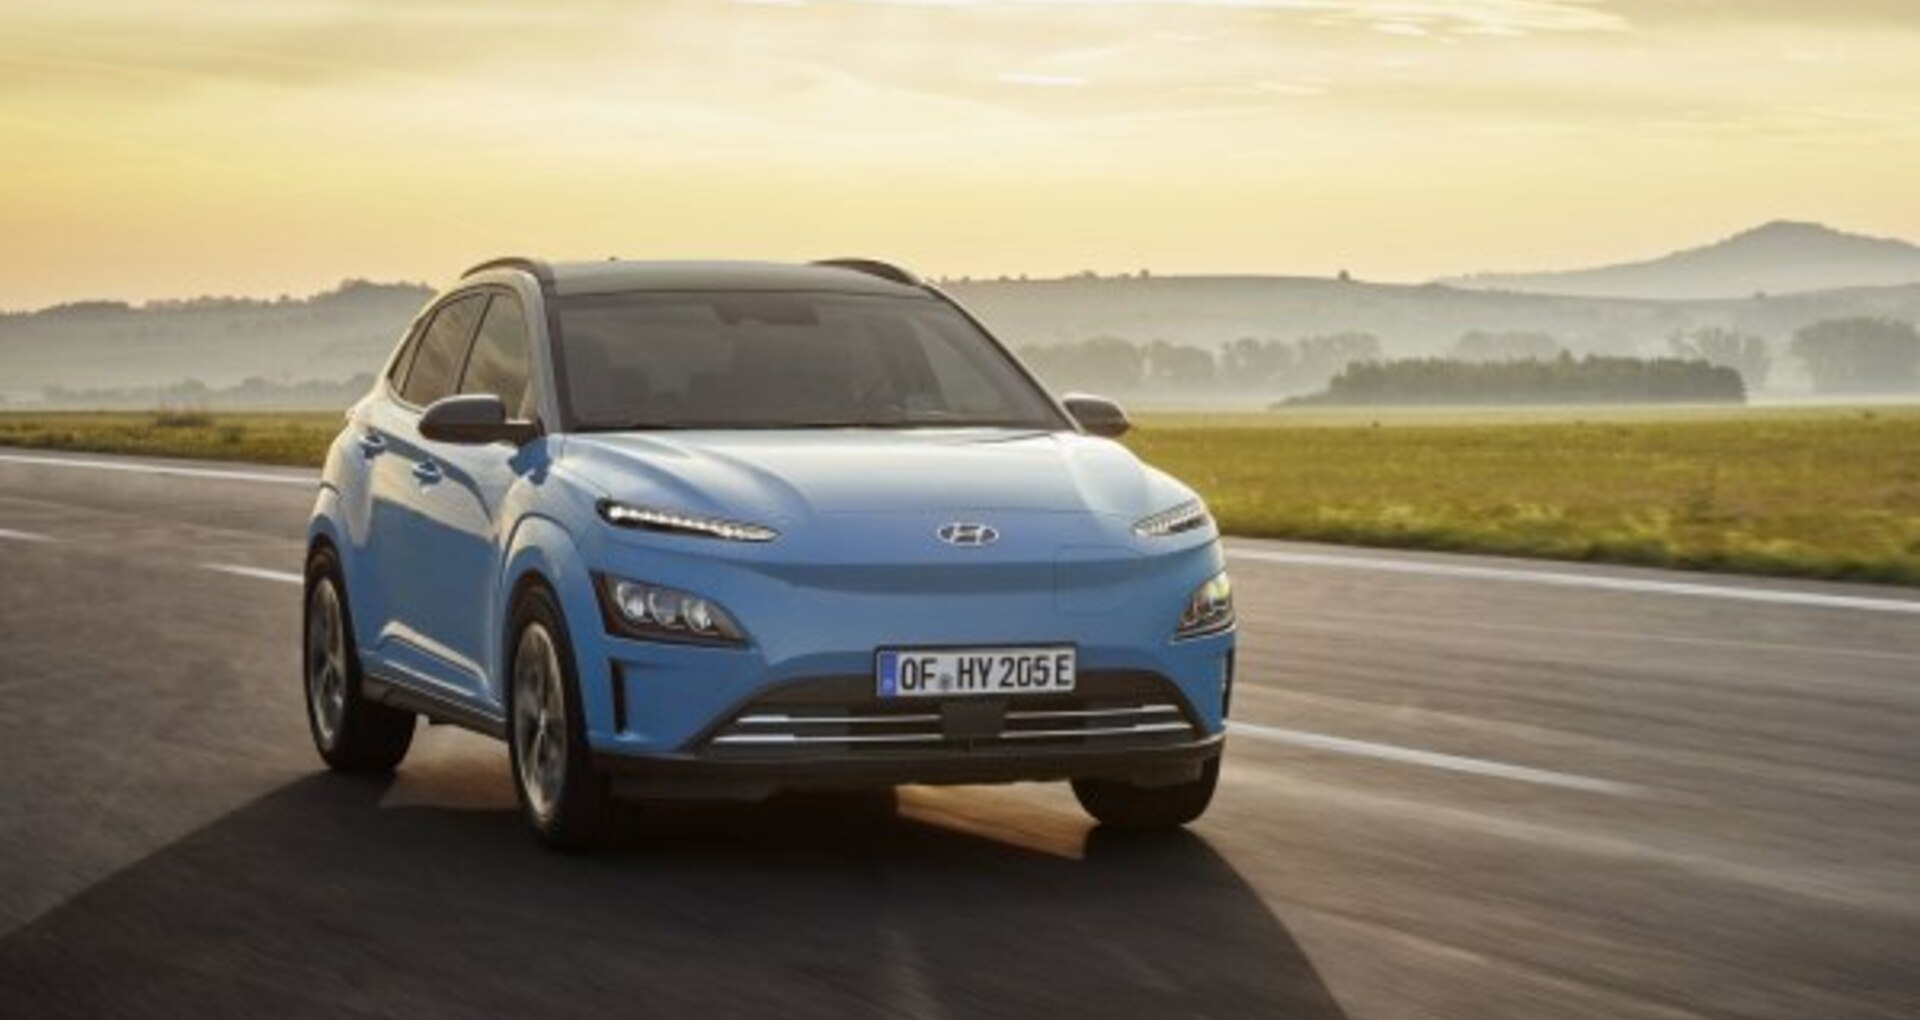 Hyundai Kona (facelift 2020) 64 kWh Long-range (204 Hp) Electric 2020, 2021, 2022 